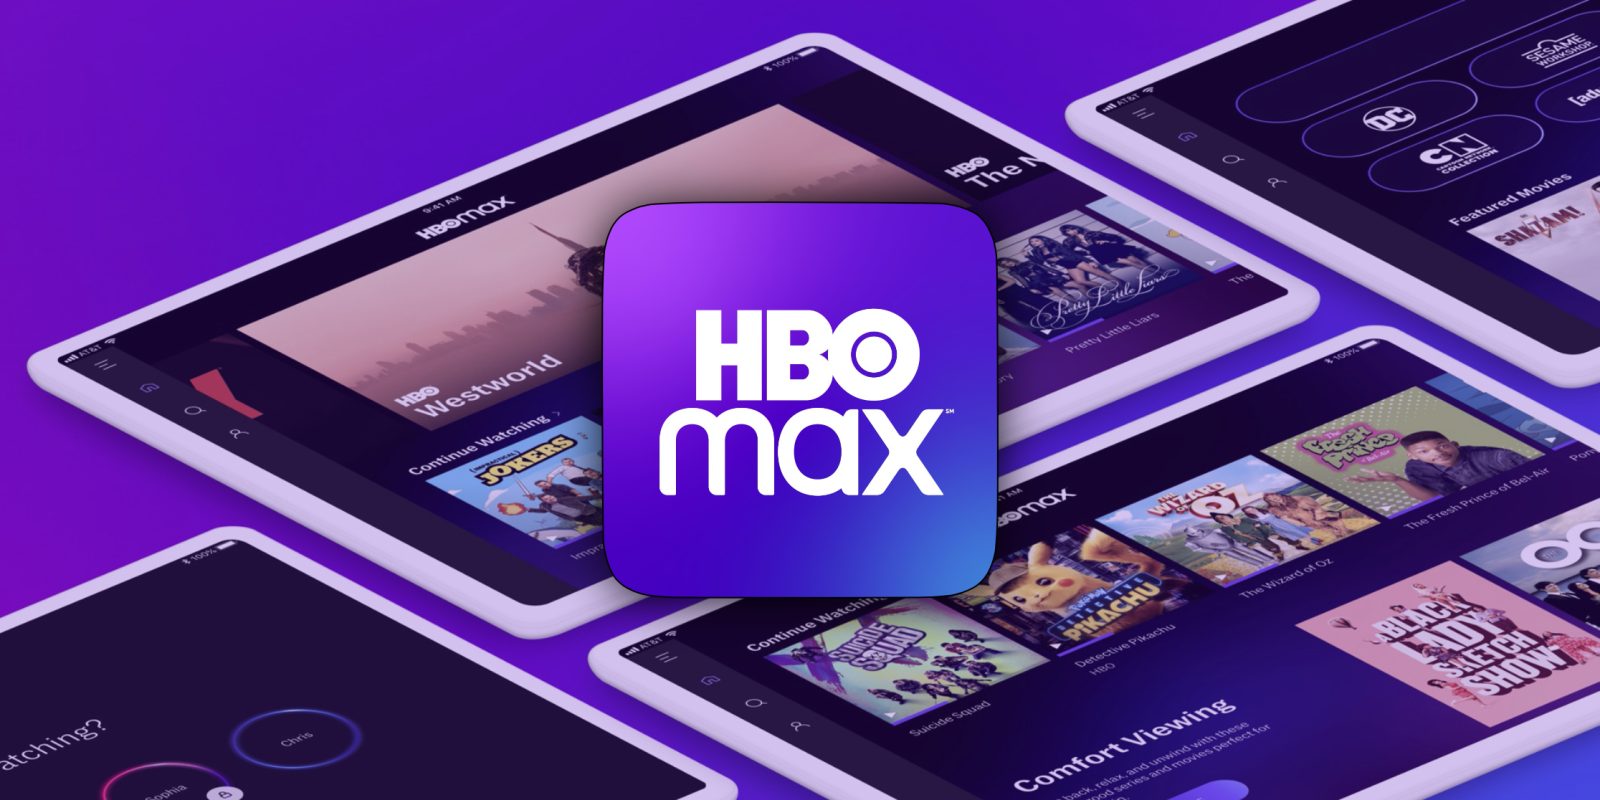 Ben 10 Season 1 Streaming: Watch & Stream Online via Netflix & HBO Max